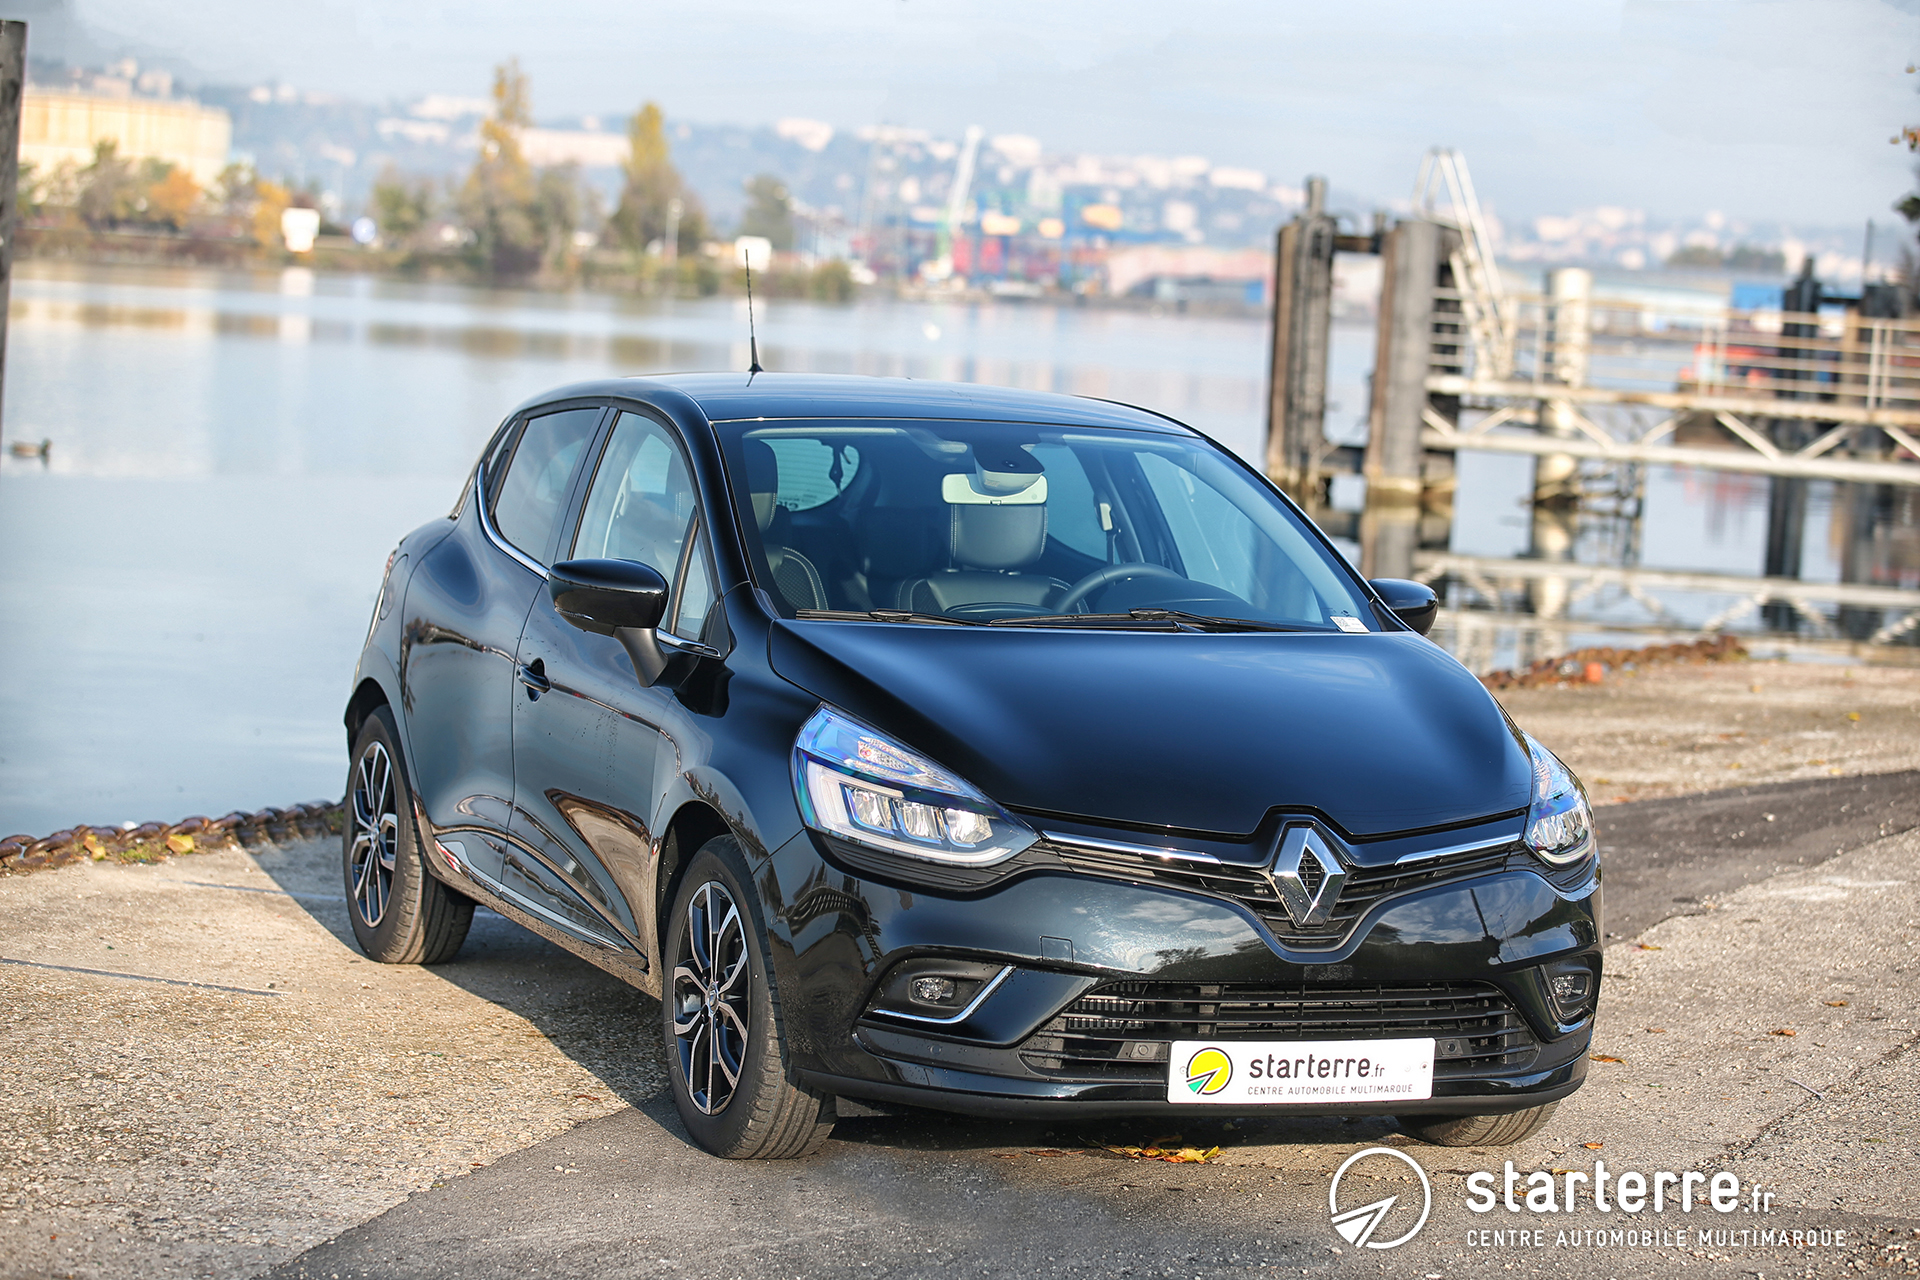 https://mag.starterre.fr/wp-content/uploads/2016/12/Renault-Clio-IV-00.jpg